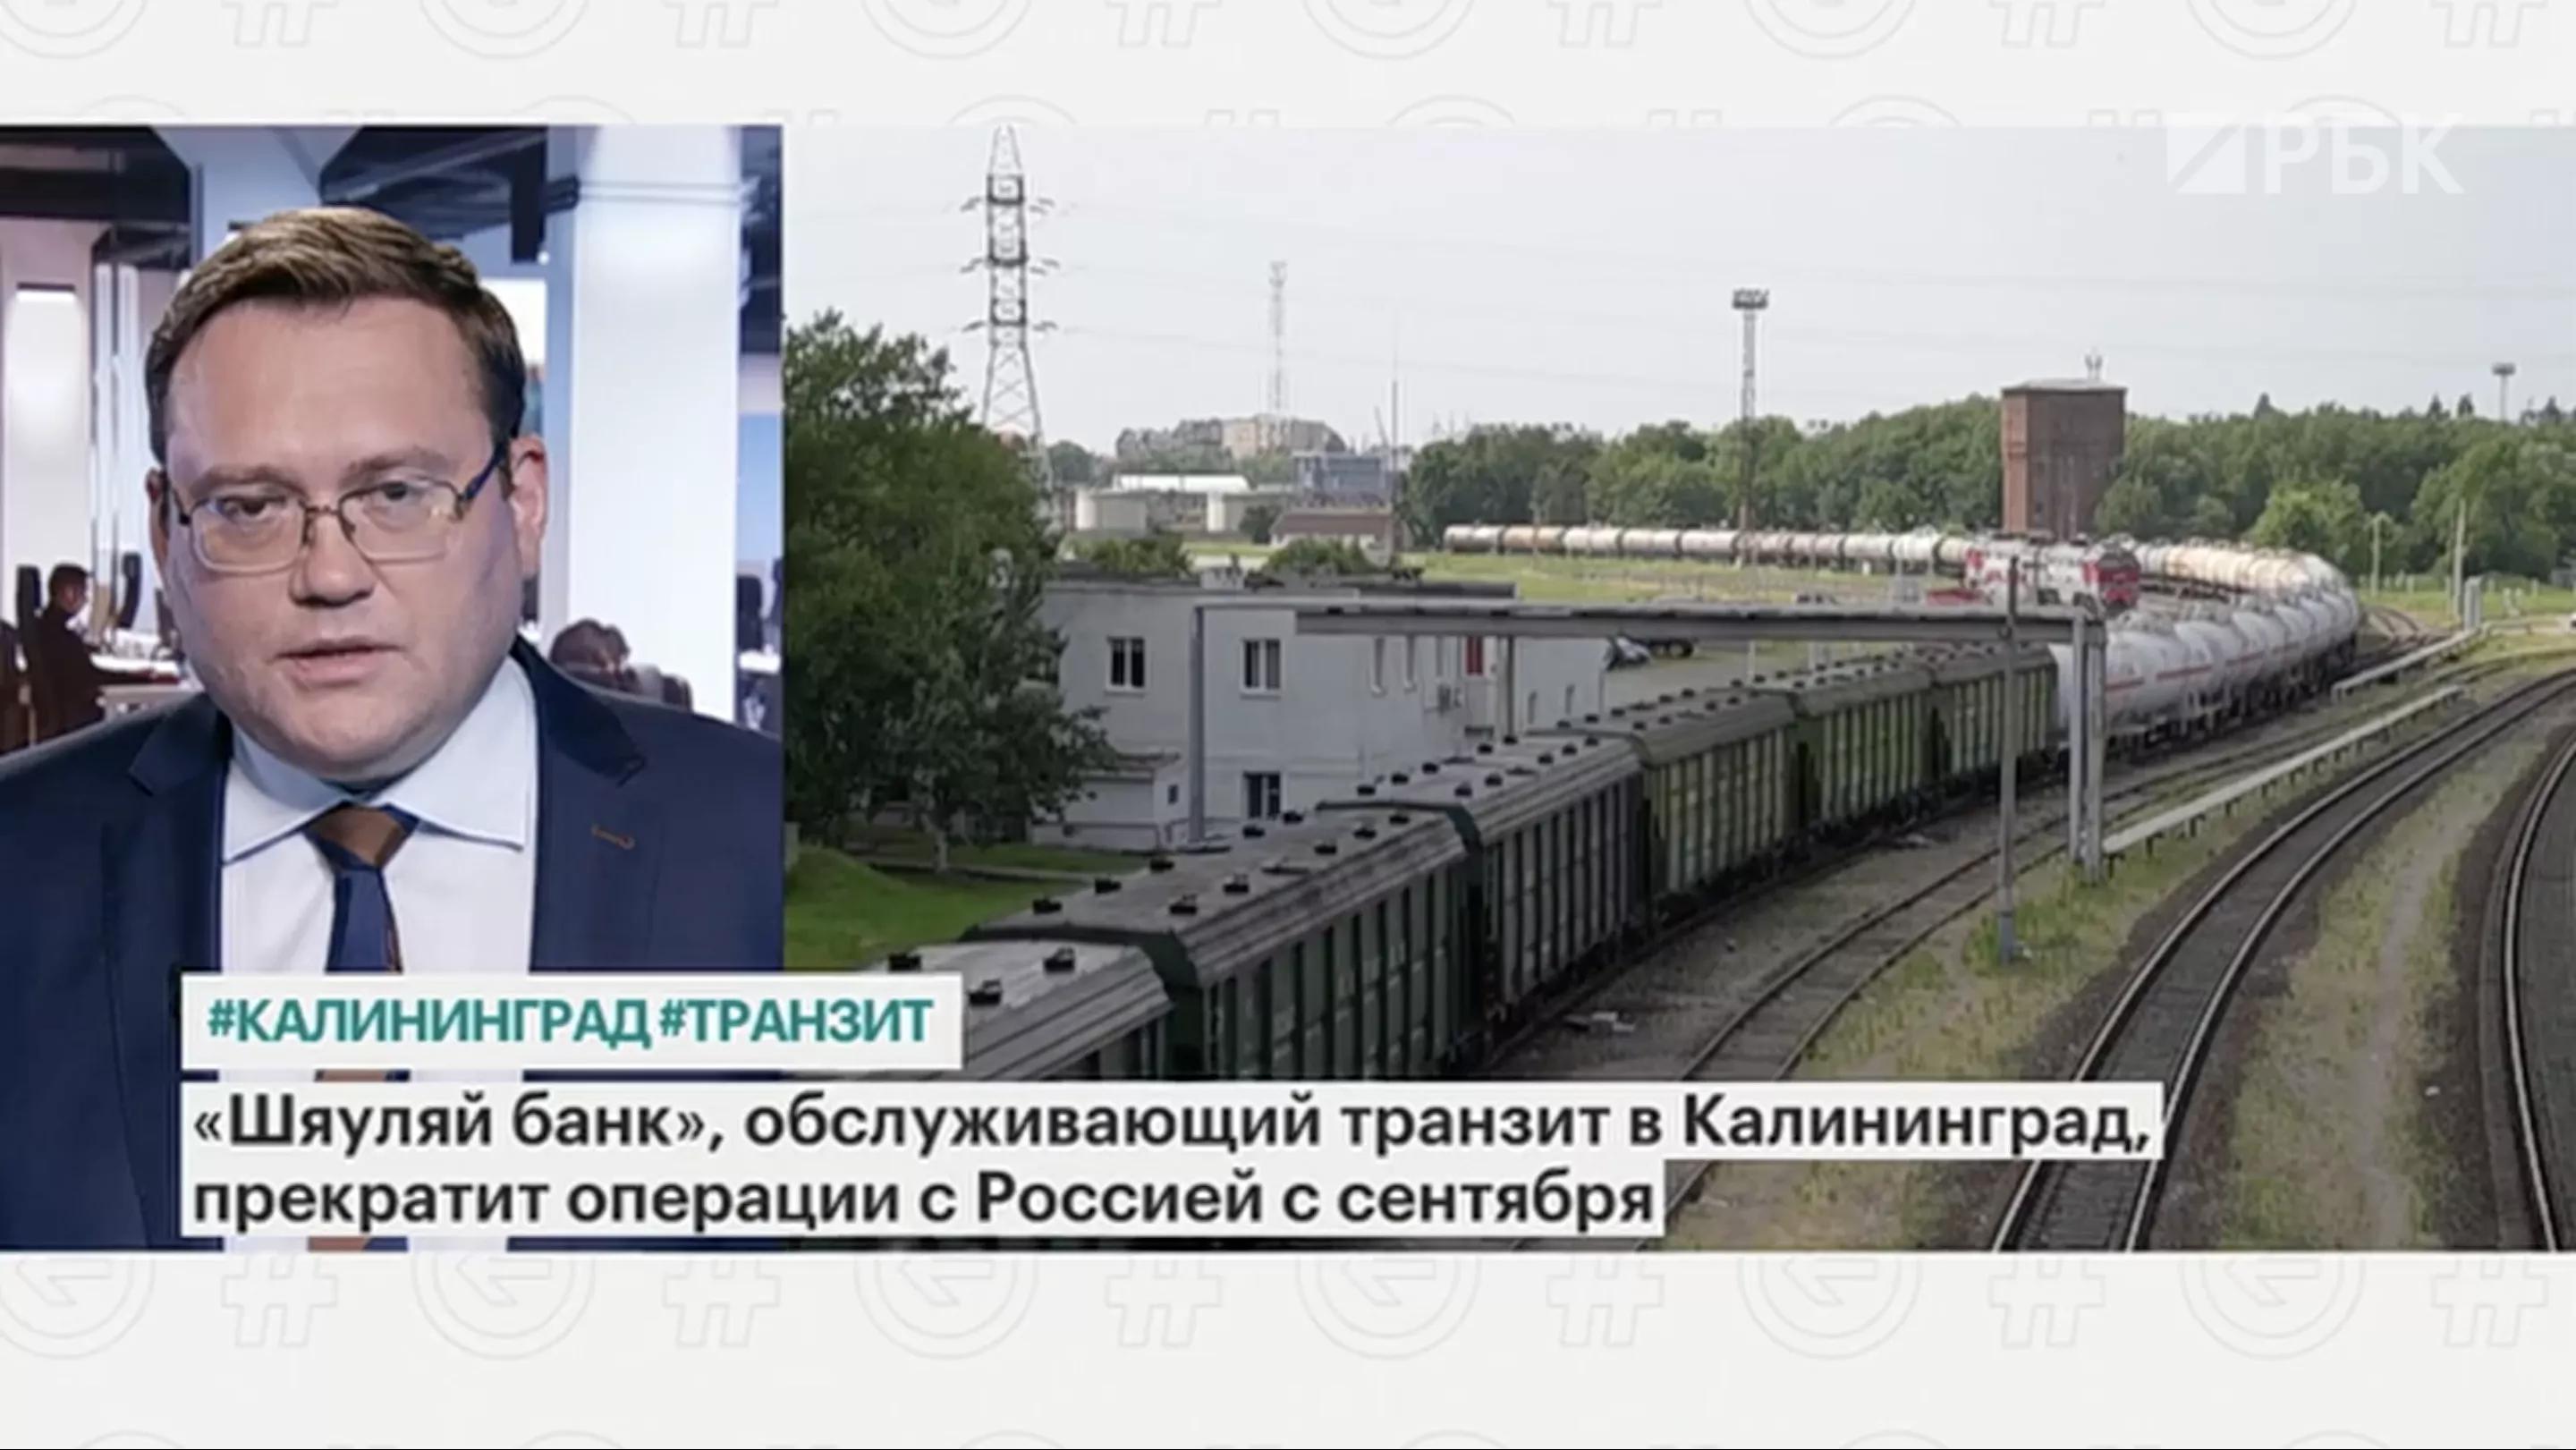 Алиханов допустил остановку транзита из-за проблем с литовским банком